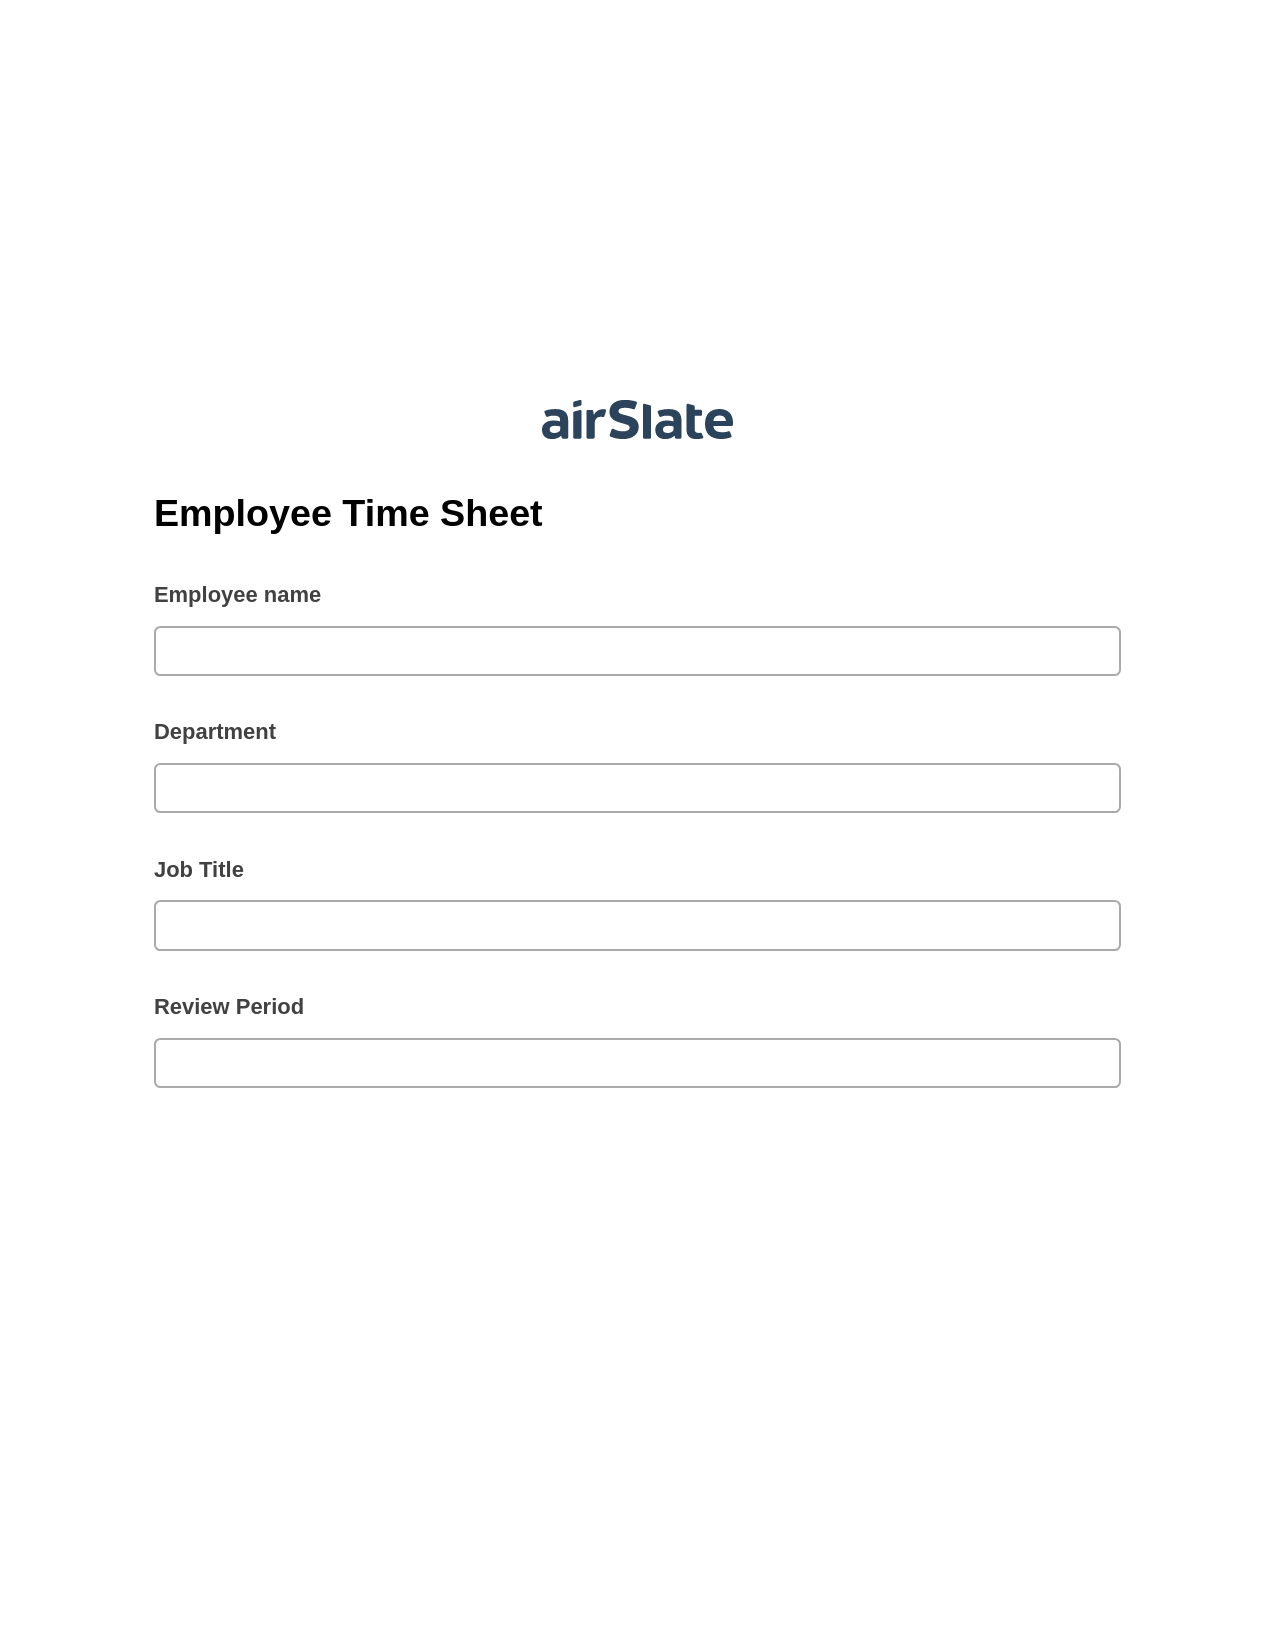 Multirole Employee Time Sheet Pre-fill from Litmos bot, Create slate addon, Archive to Google Drive Bot